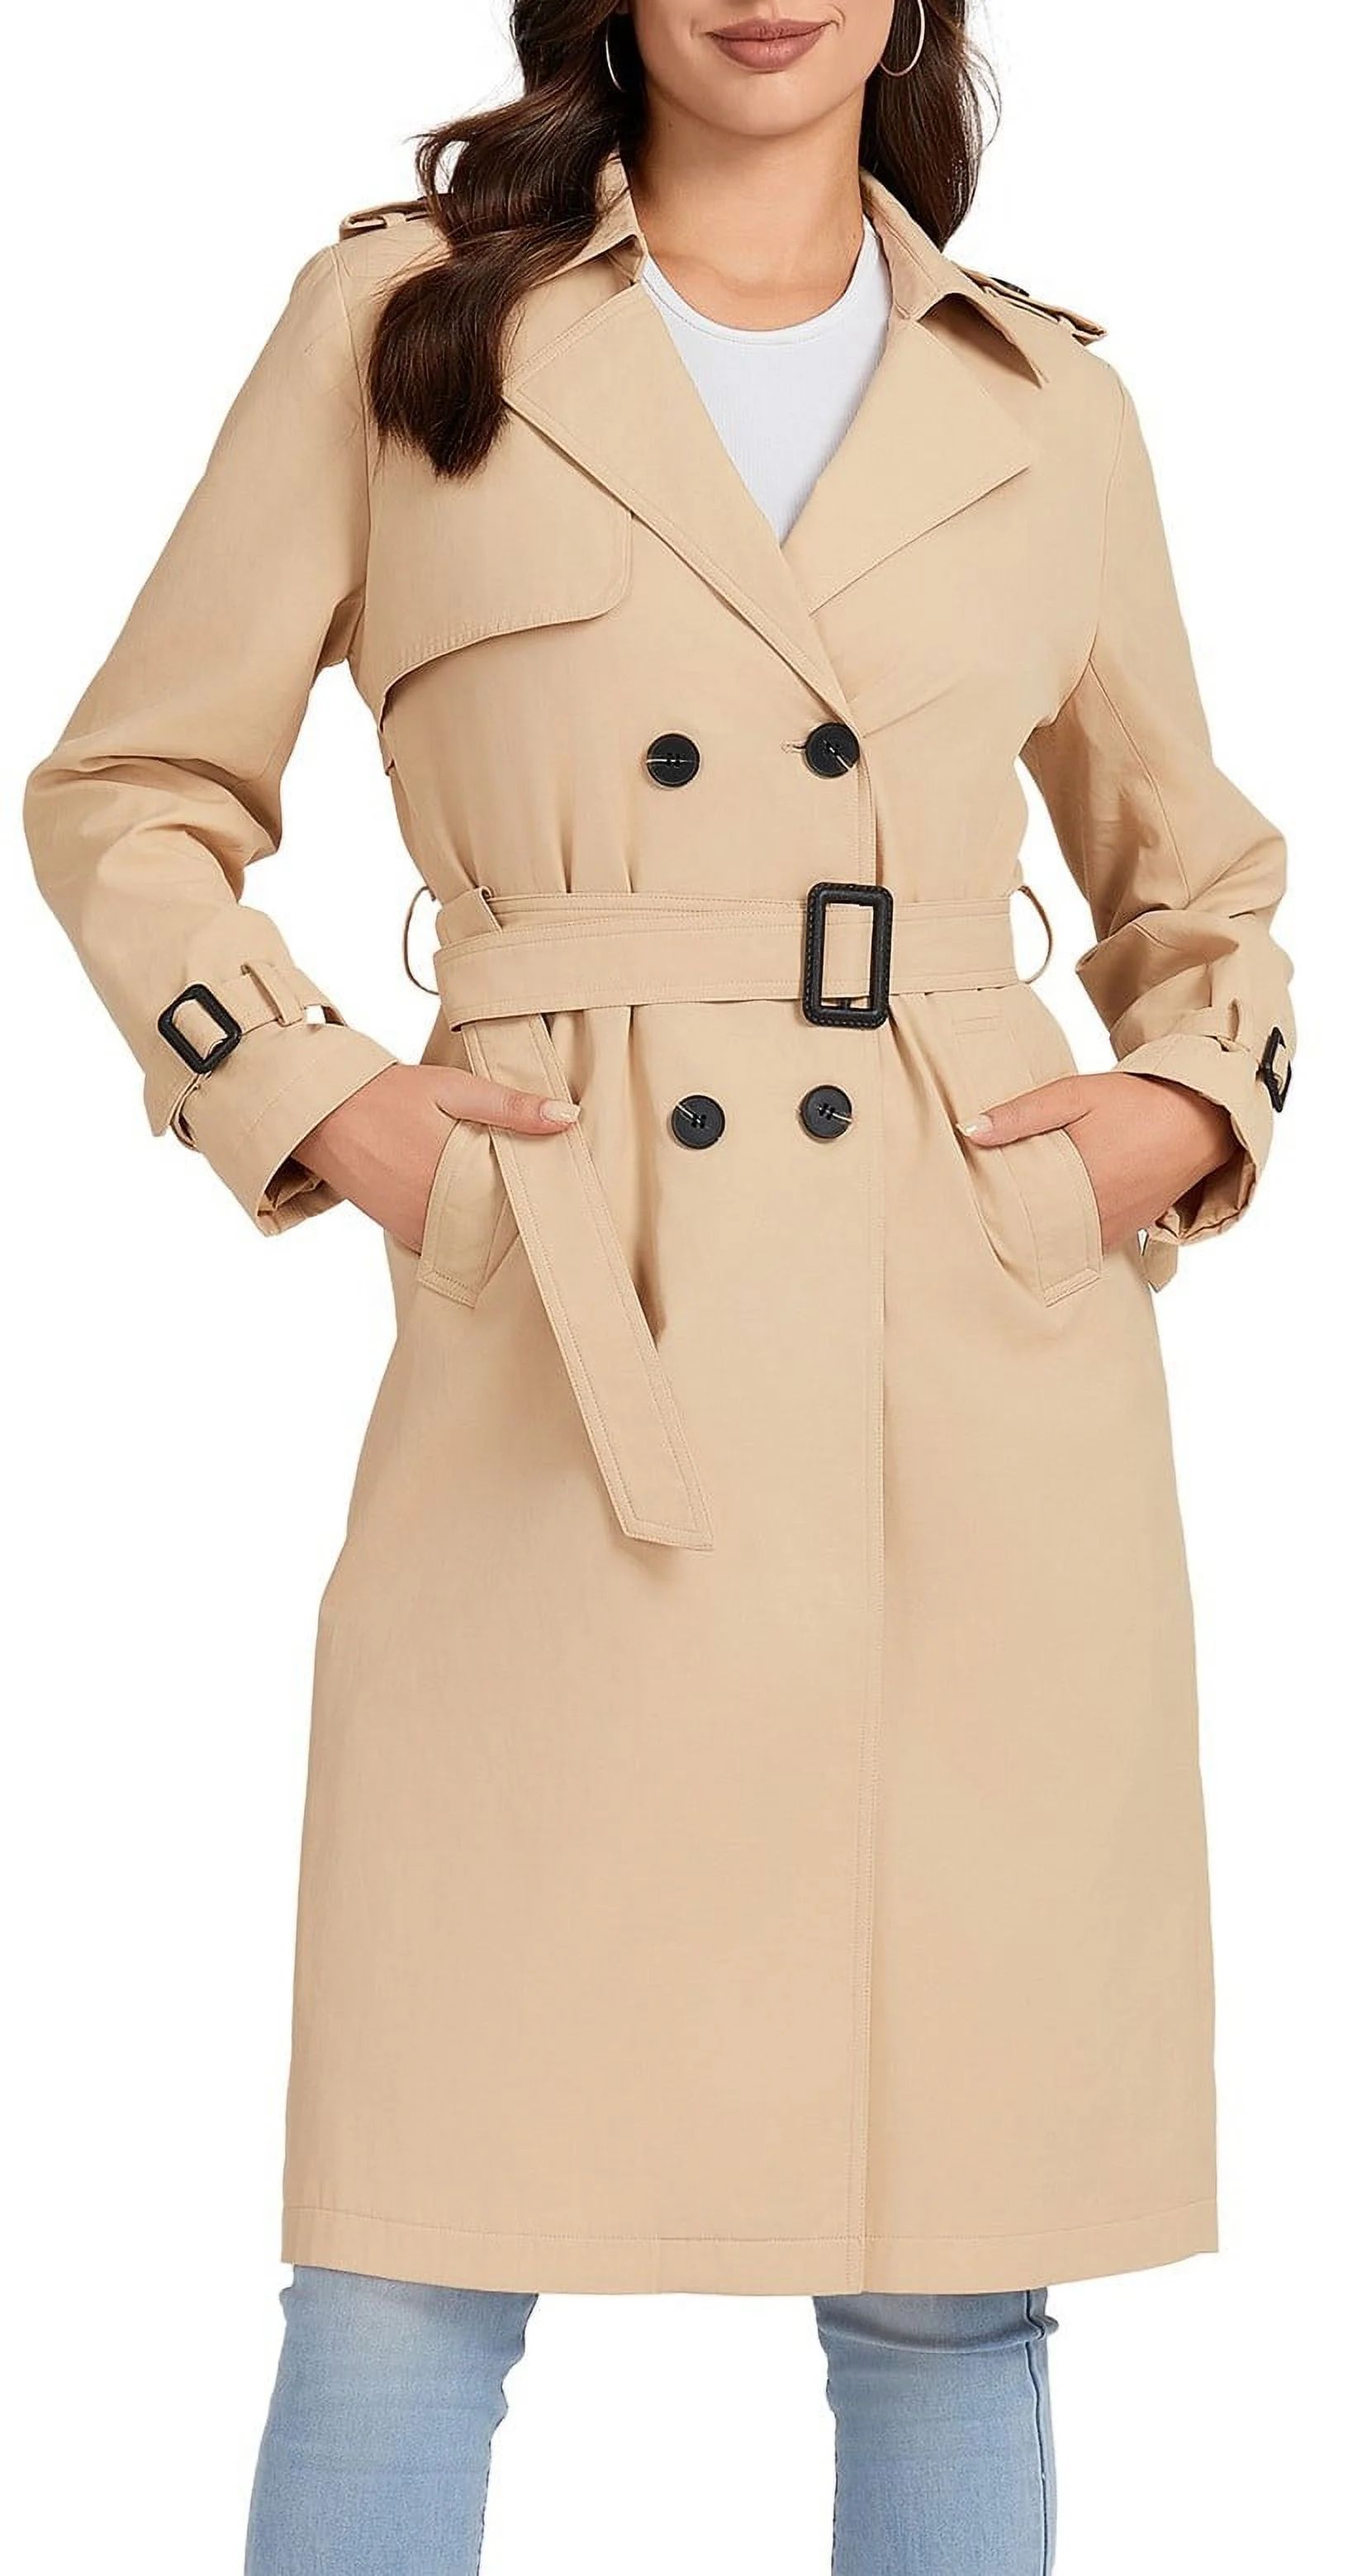 MECALA Womens Double Breasted Trench Coat Buckle Belted Jacket Windproof Overcoat,Khaki,M | Walmart (US)